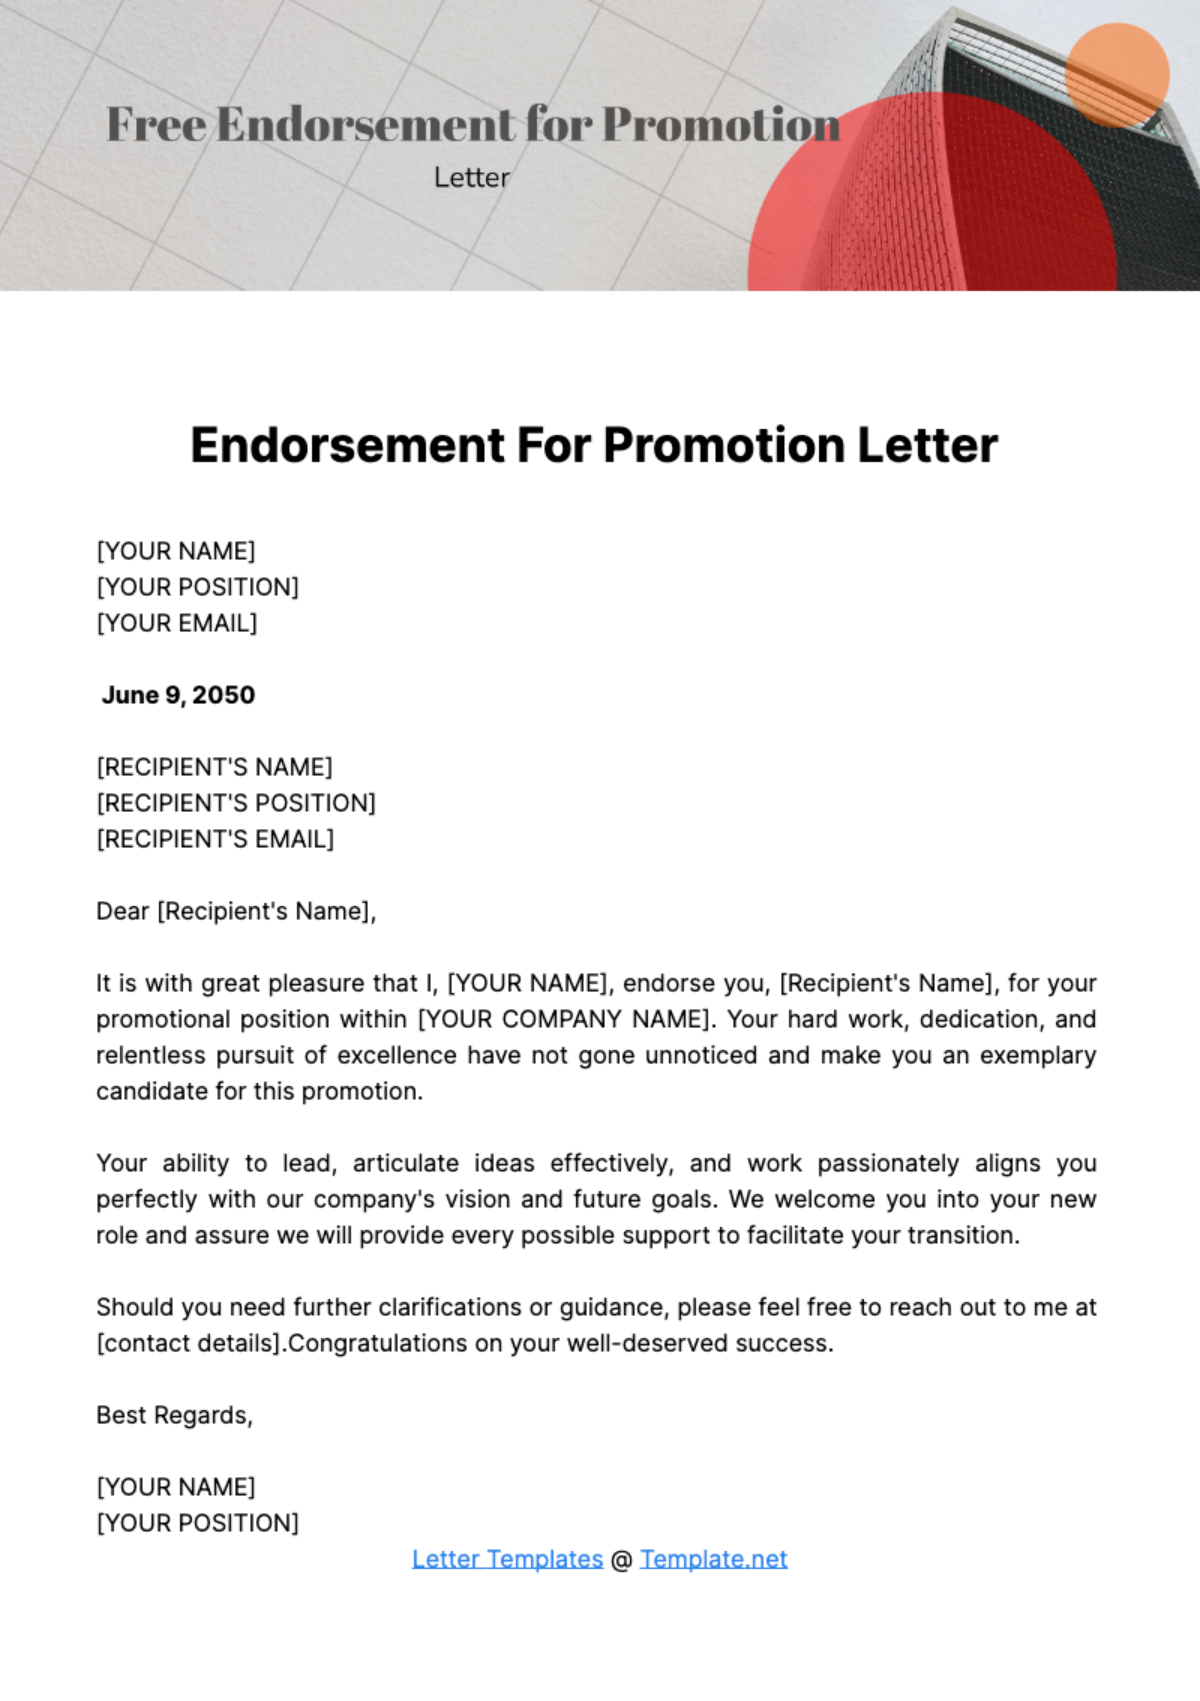 Endorsement for Promotion Letter Template